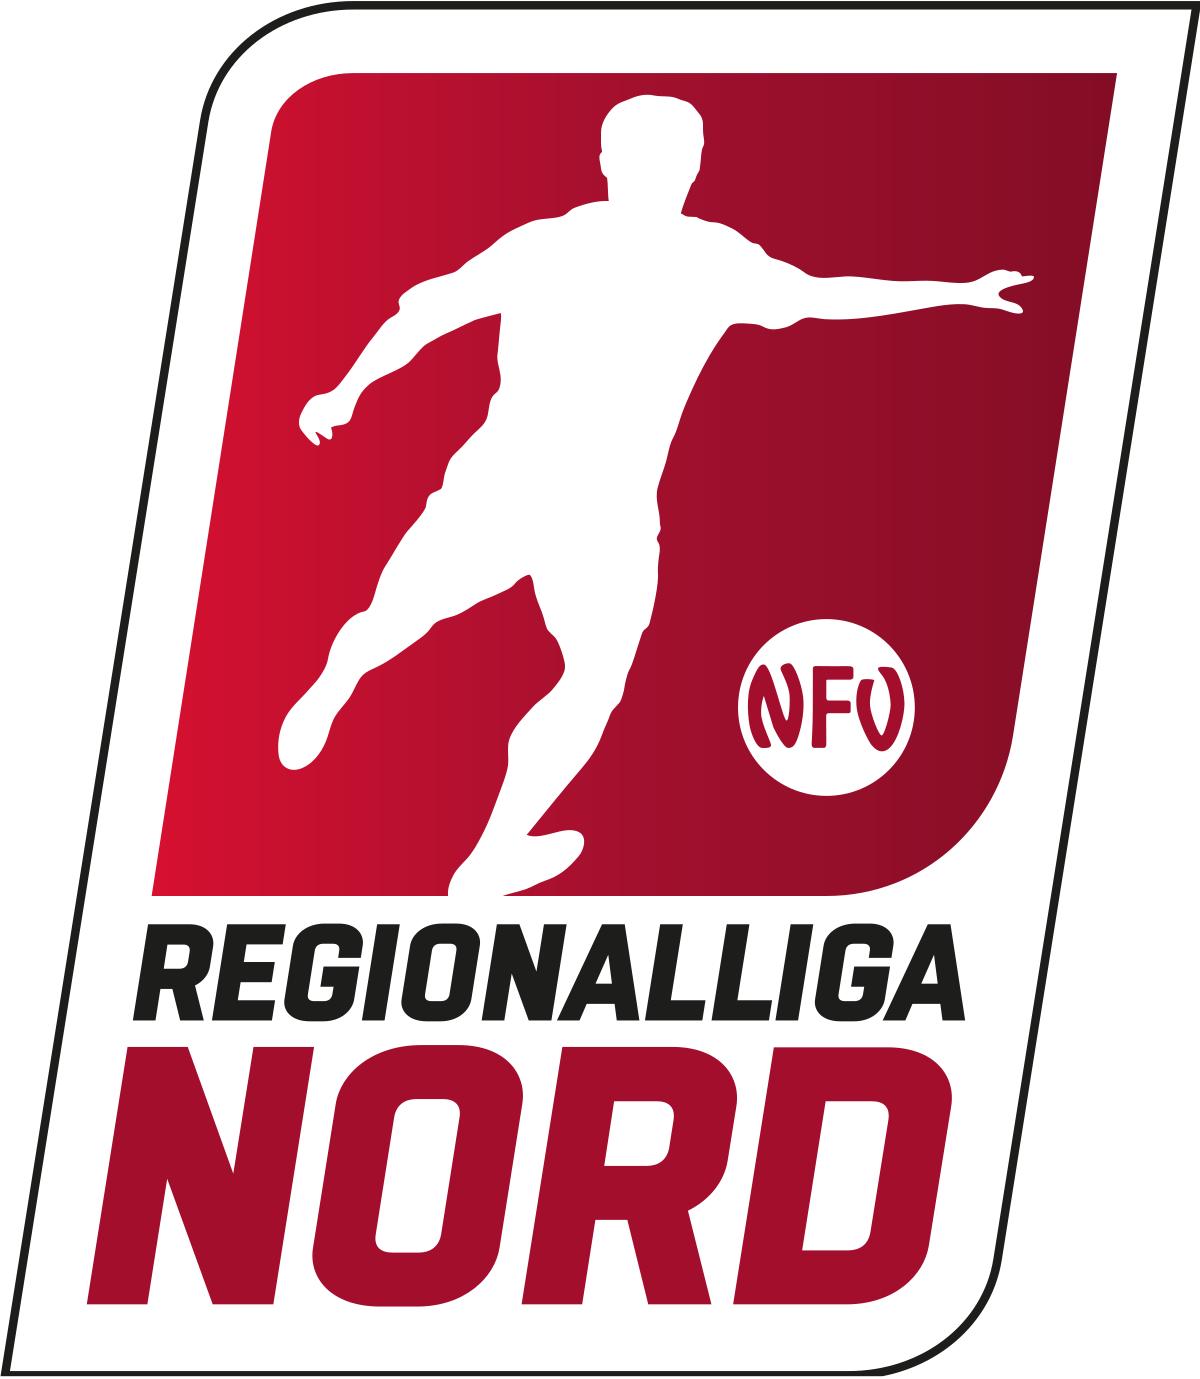 Regionalliga Nord - Wikipedia